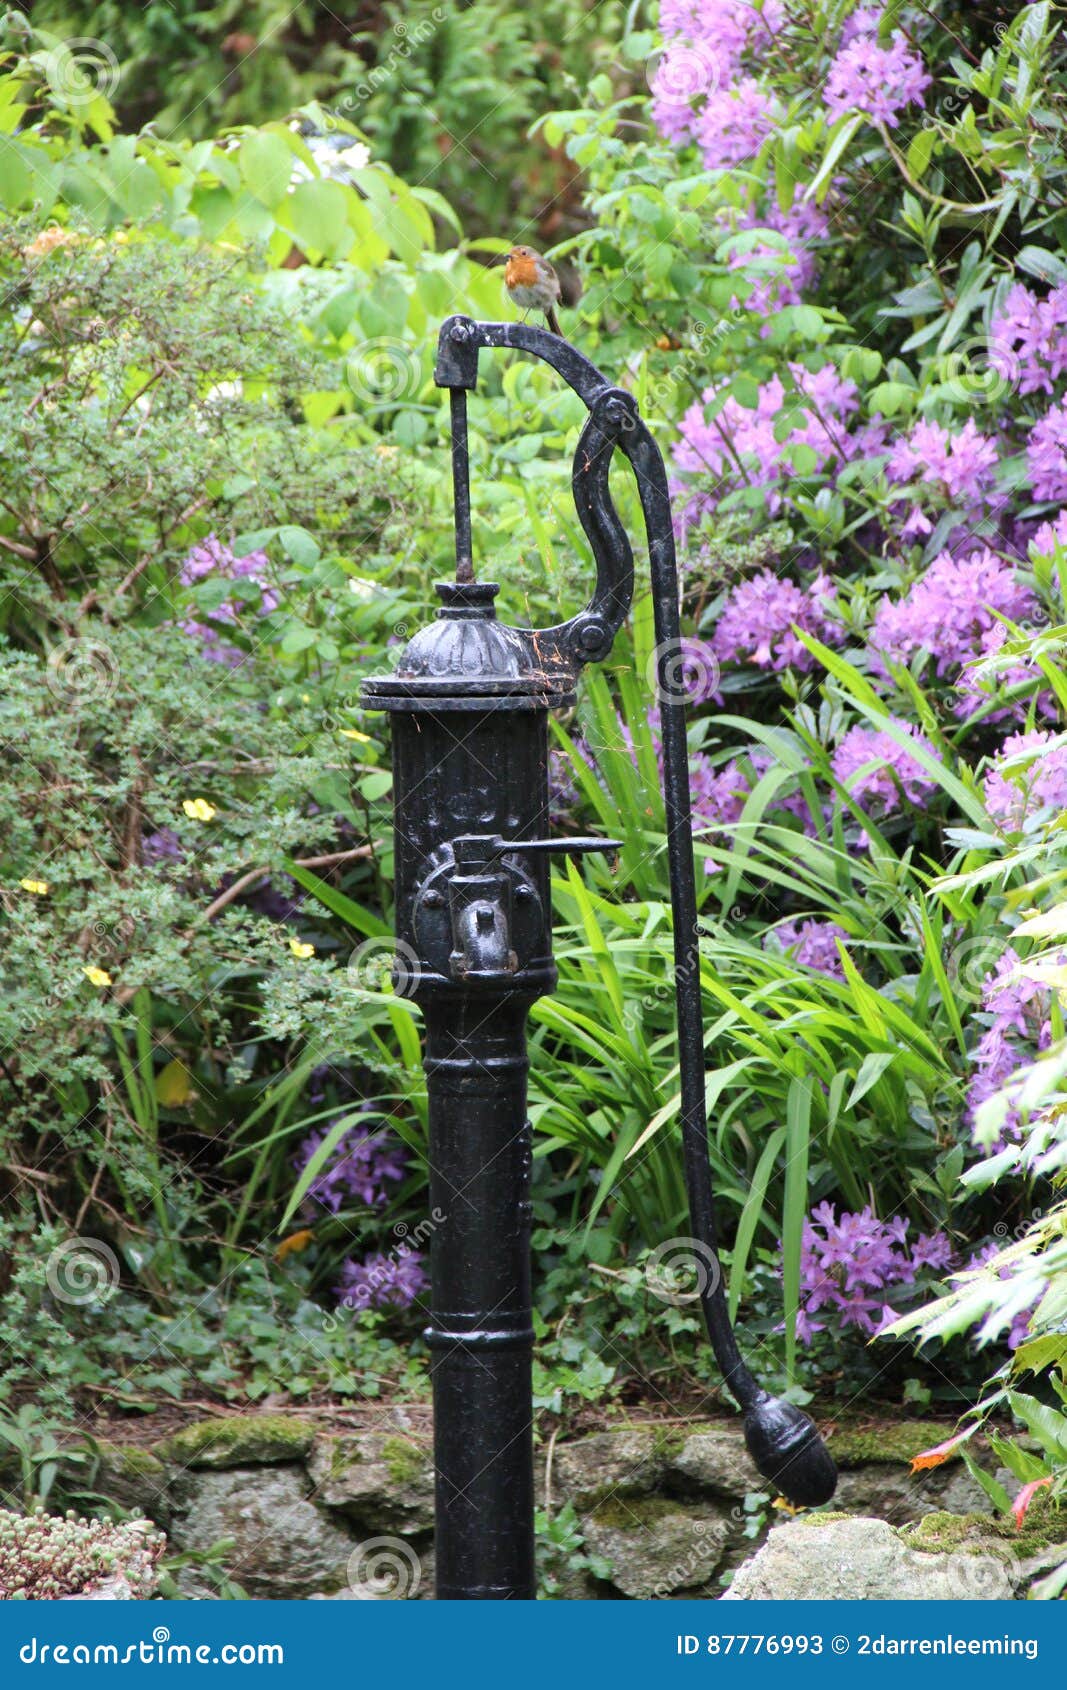 black metal old waterpump in a garden